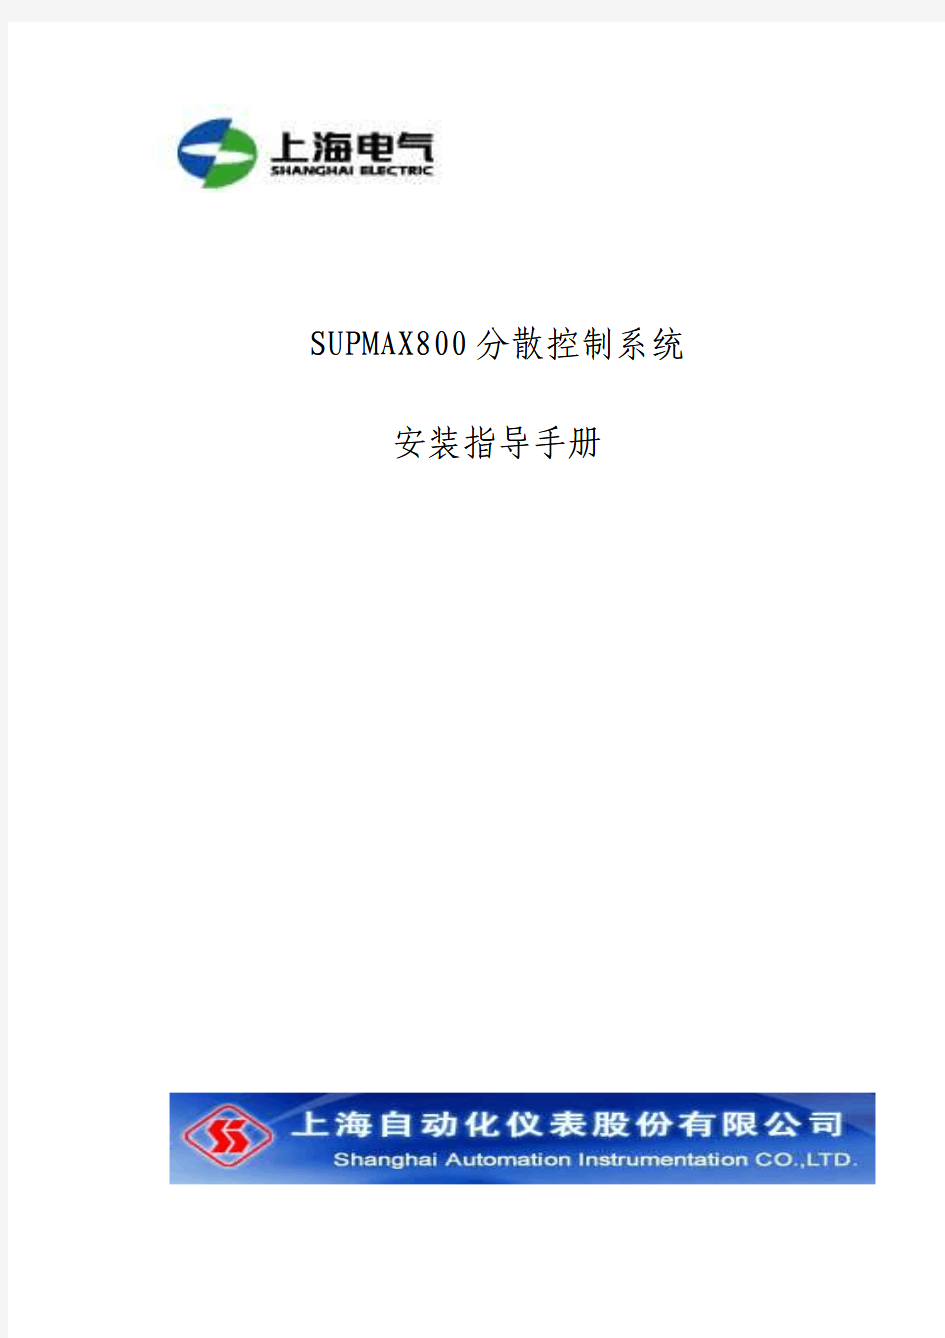 SUPMAX800分散控制系统安装指导手册-上海电气集团